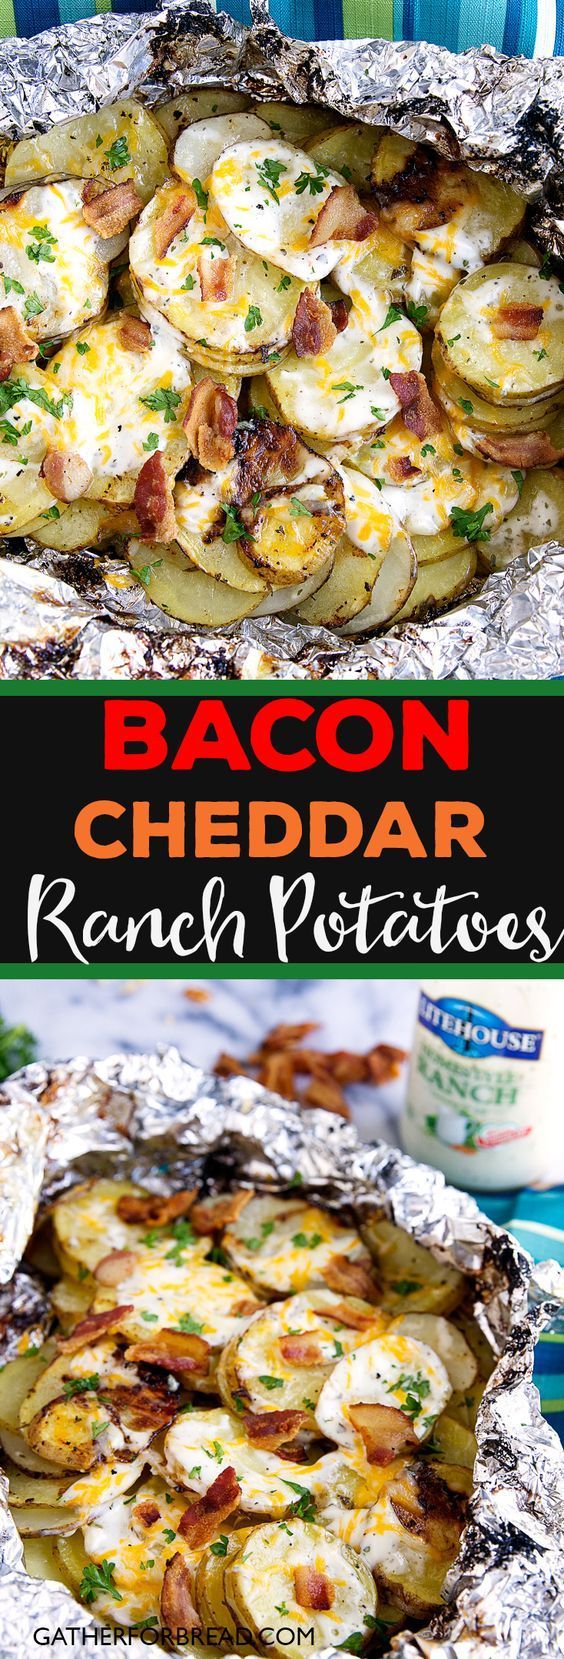 Bacon cheddar ranch potatoes by gatherforbread.com